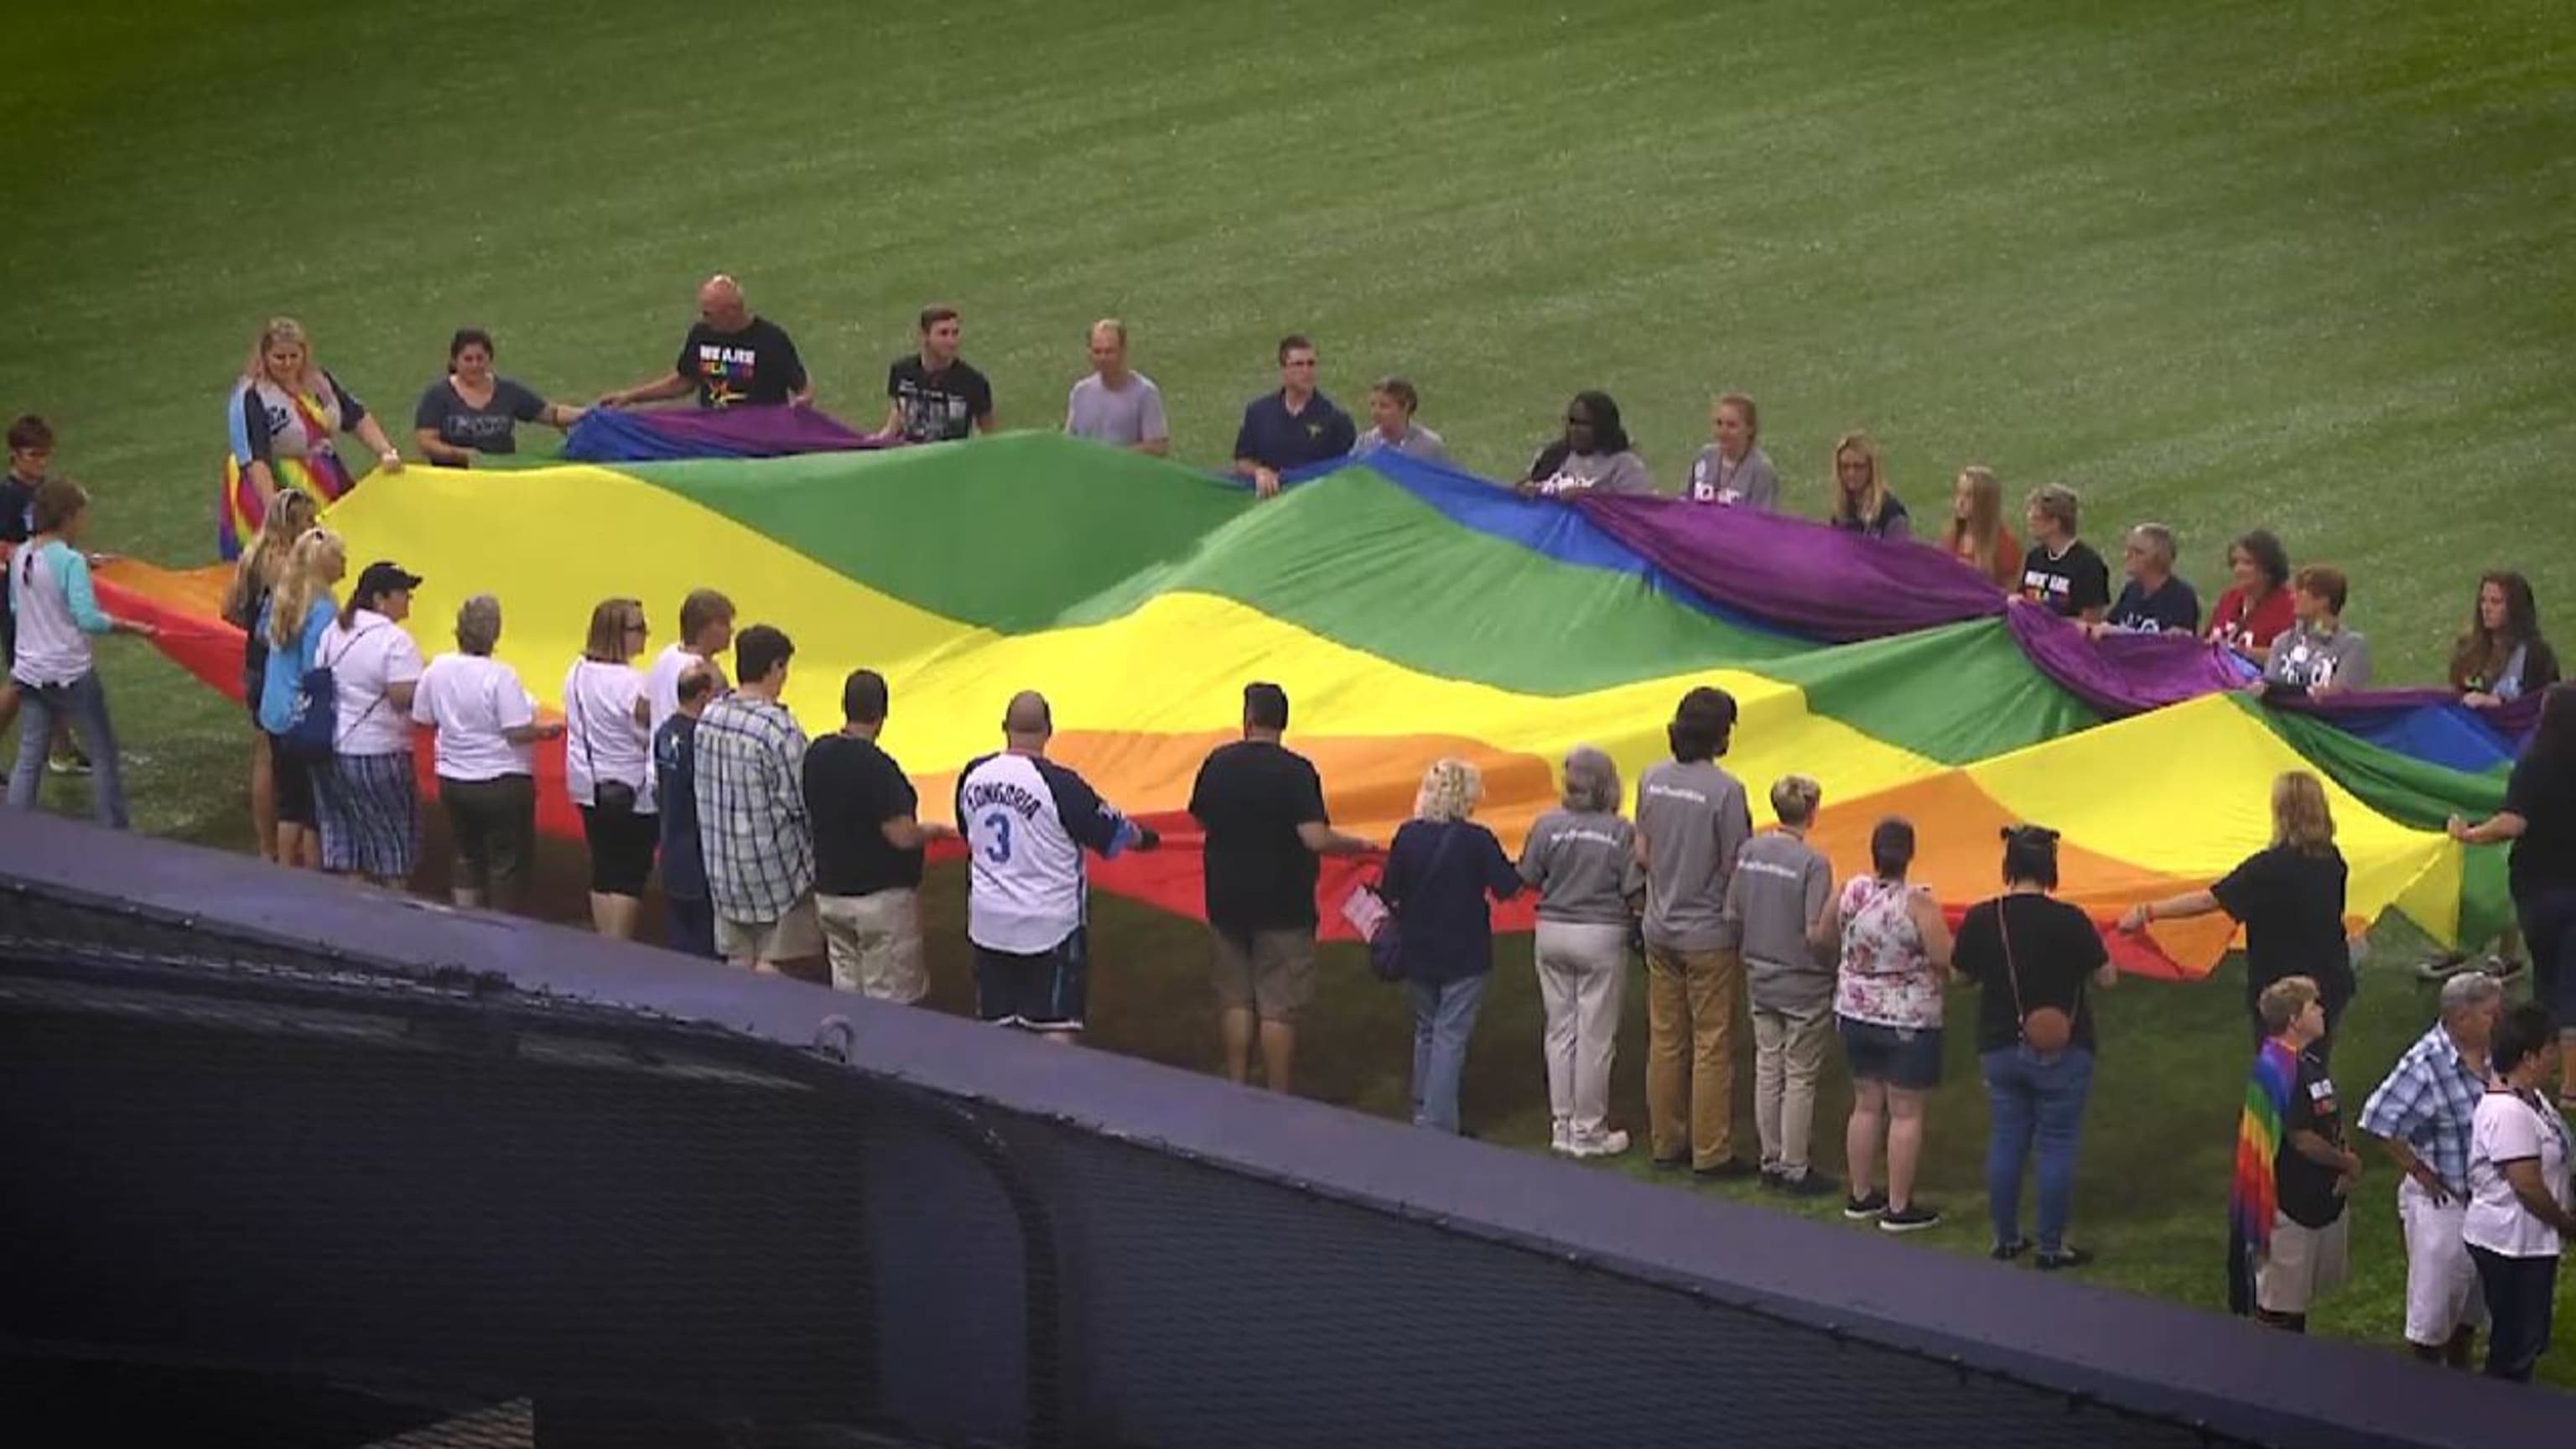 2SLGBTQ+: MLB Pride Nights show what has, hasn't changed